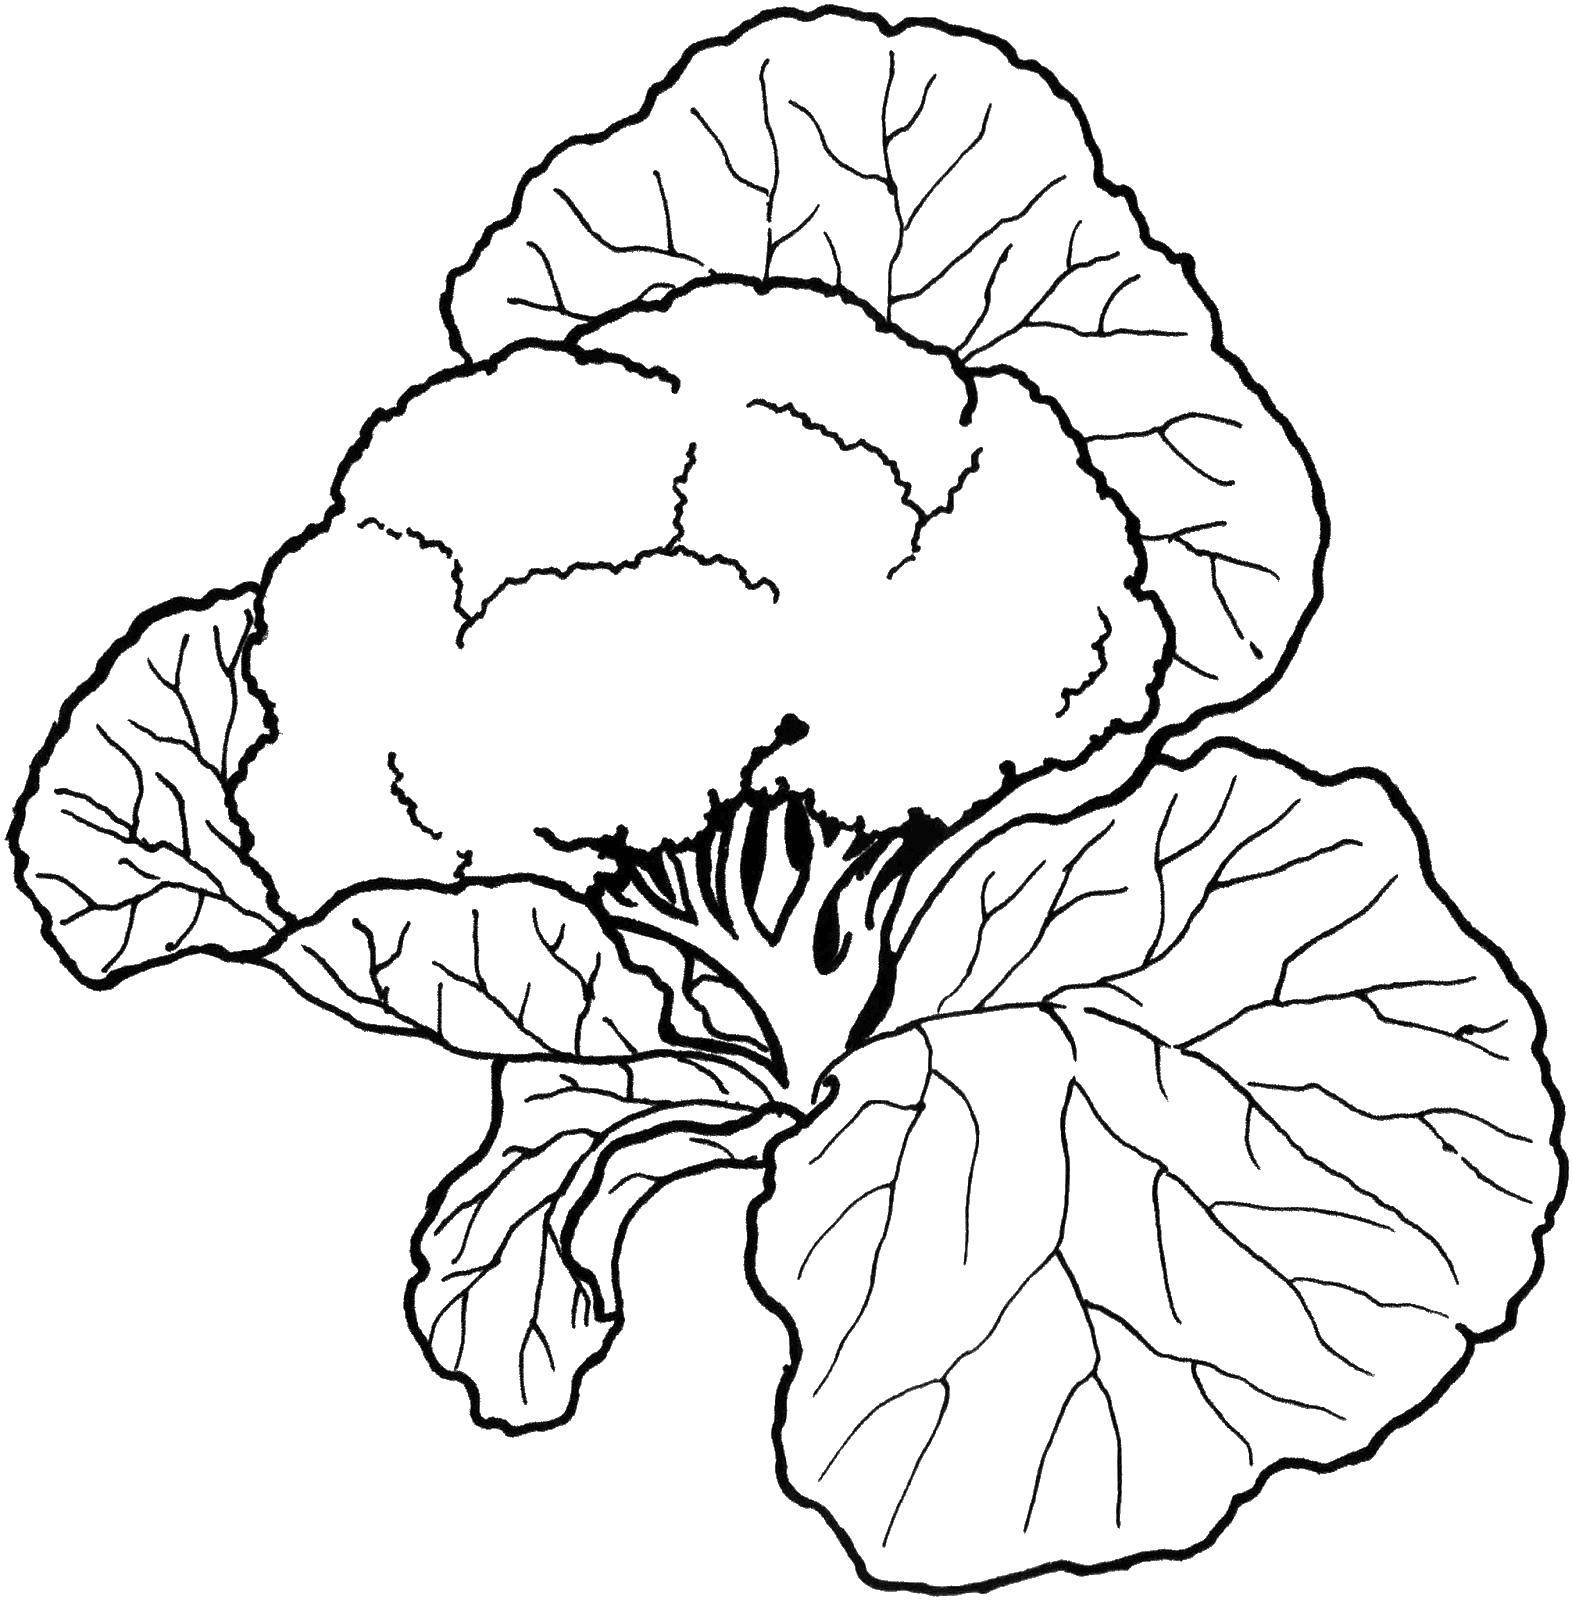 Coloring Broccoli leaf. Category Vegetables. Tags:  Vegetables.